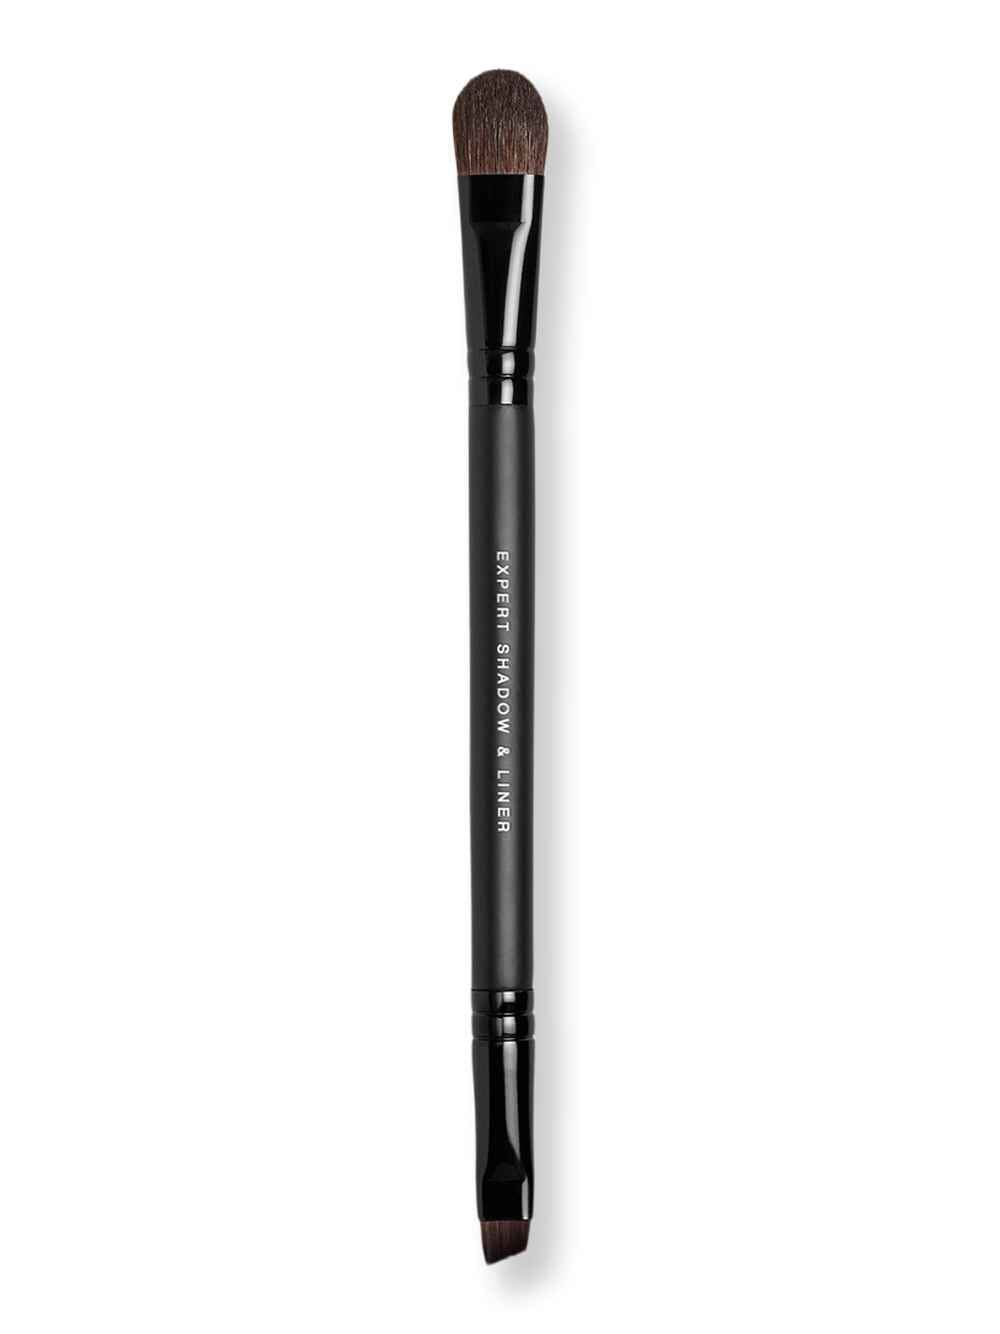 Bareminerals Bareminerals Expert Shadow & Liner Brush Makeup Brushes 